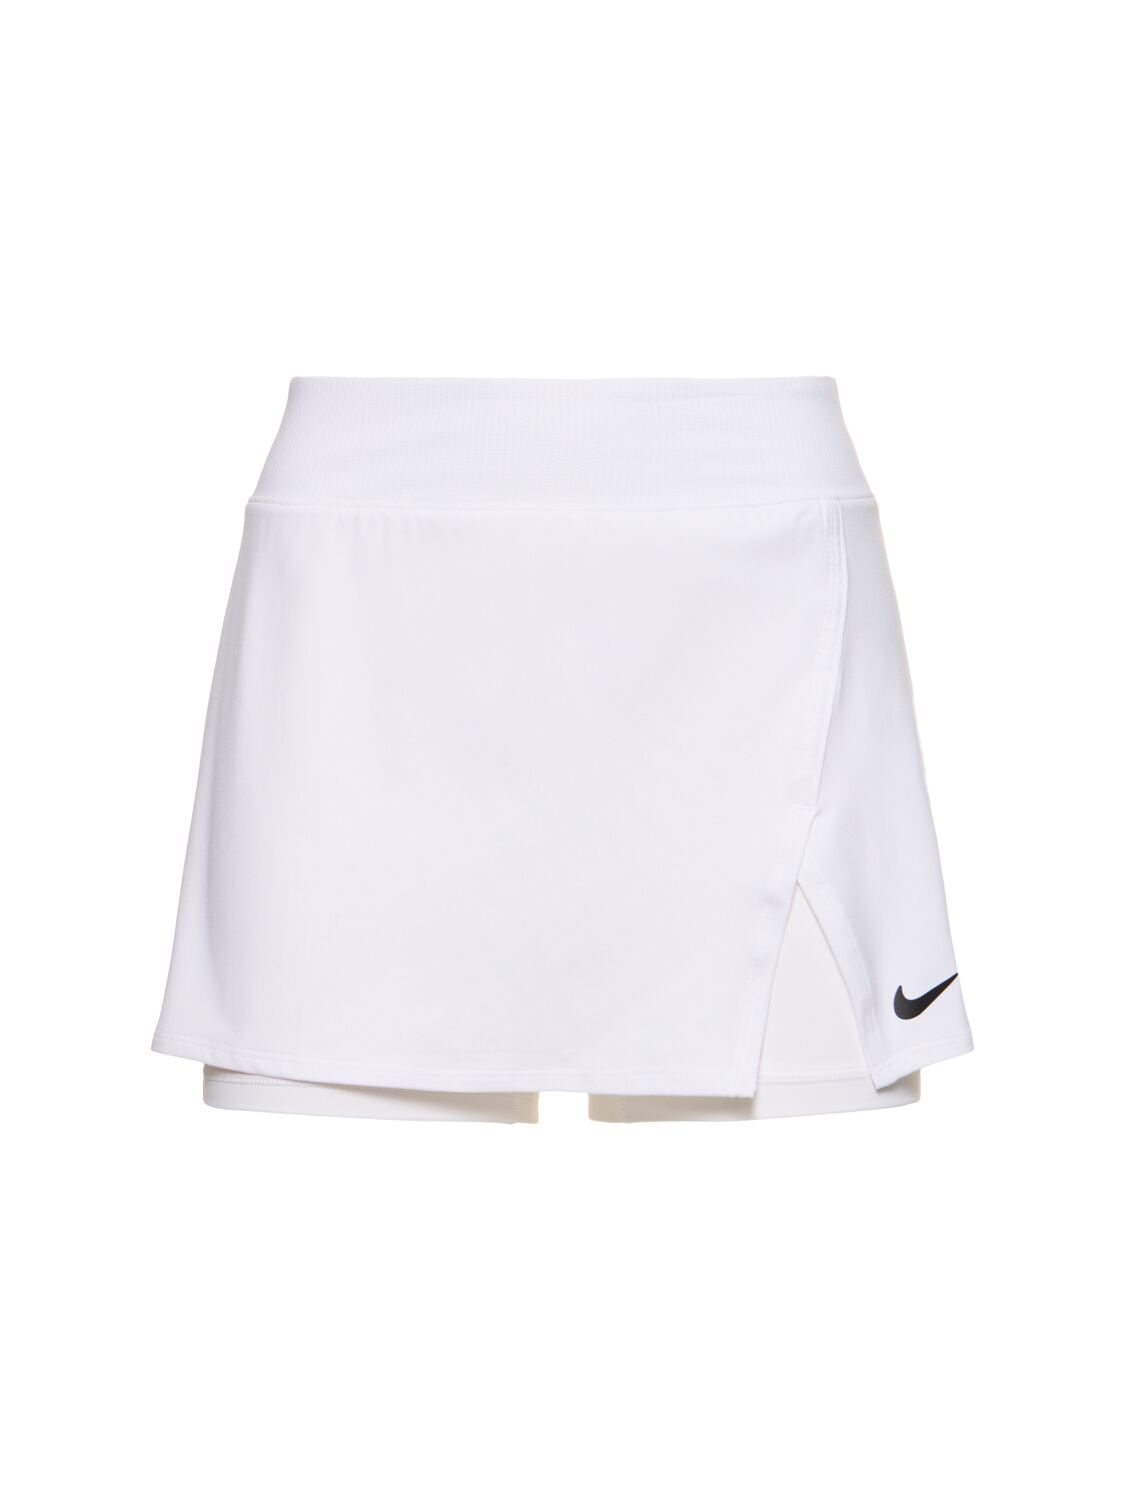 Image of Dri-fit Tennis Skirt